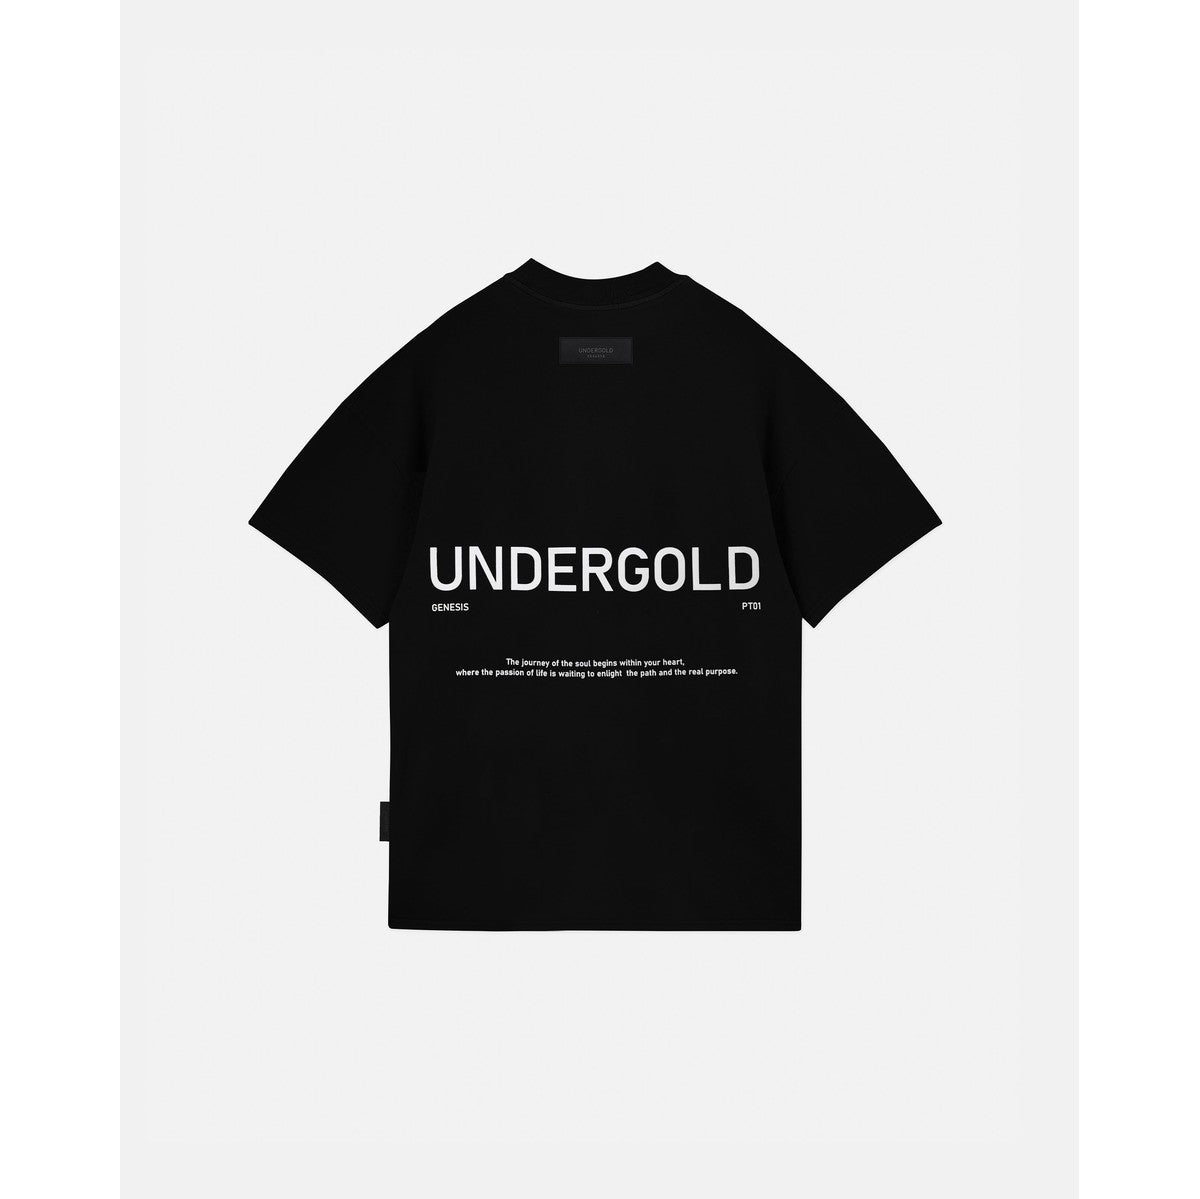 Undergold Genesis PT/1 Golden Gate (Black)